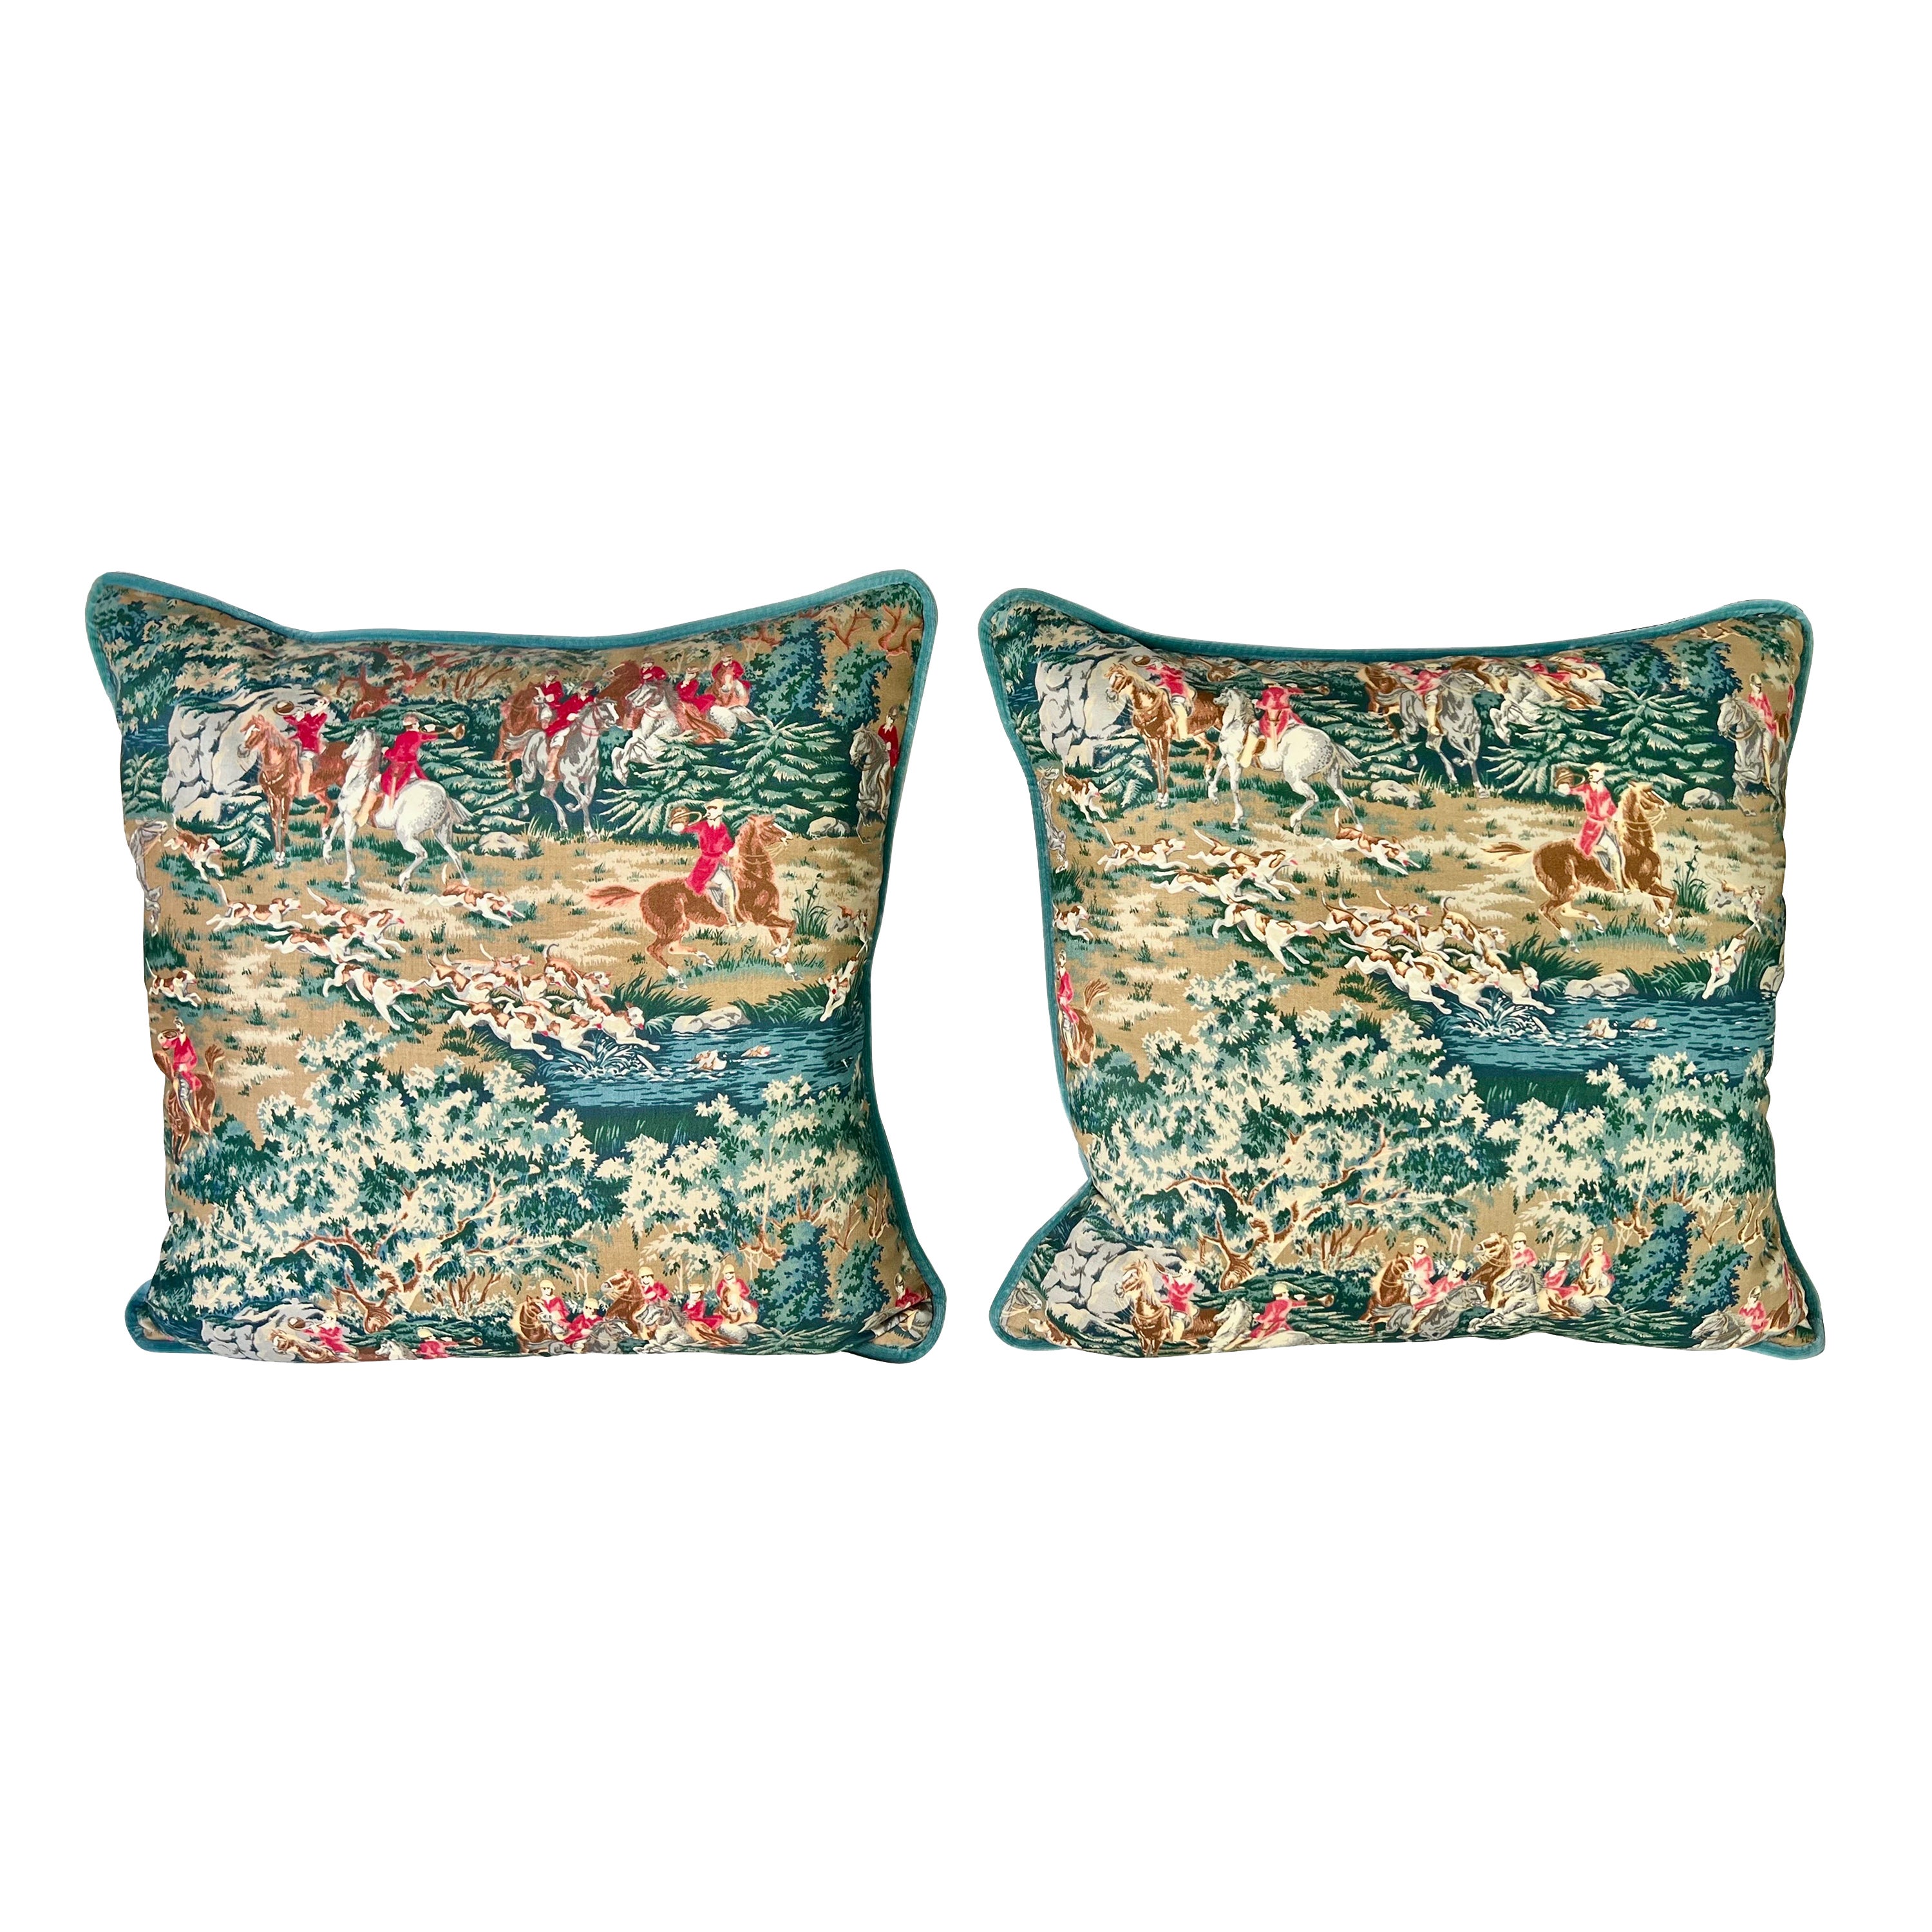 Pair of Vintage Textile Pillows w/ Hunt Scene